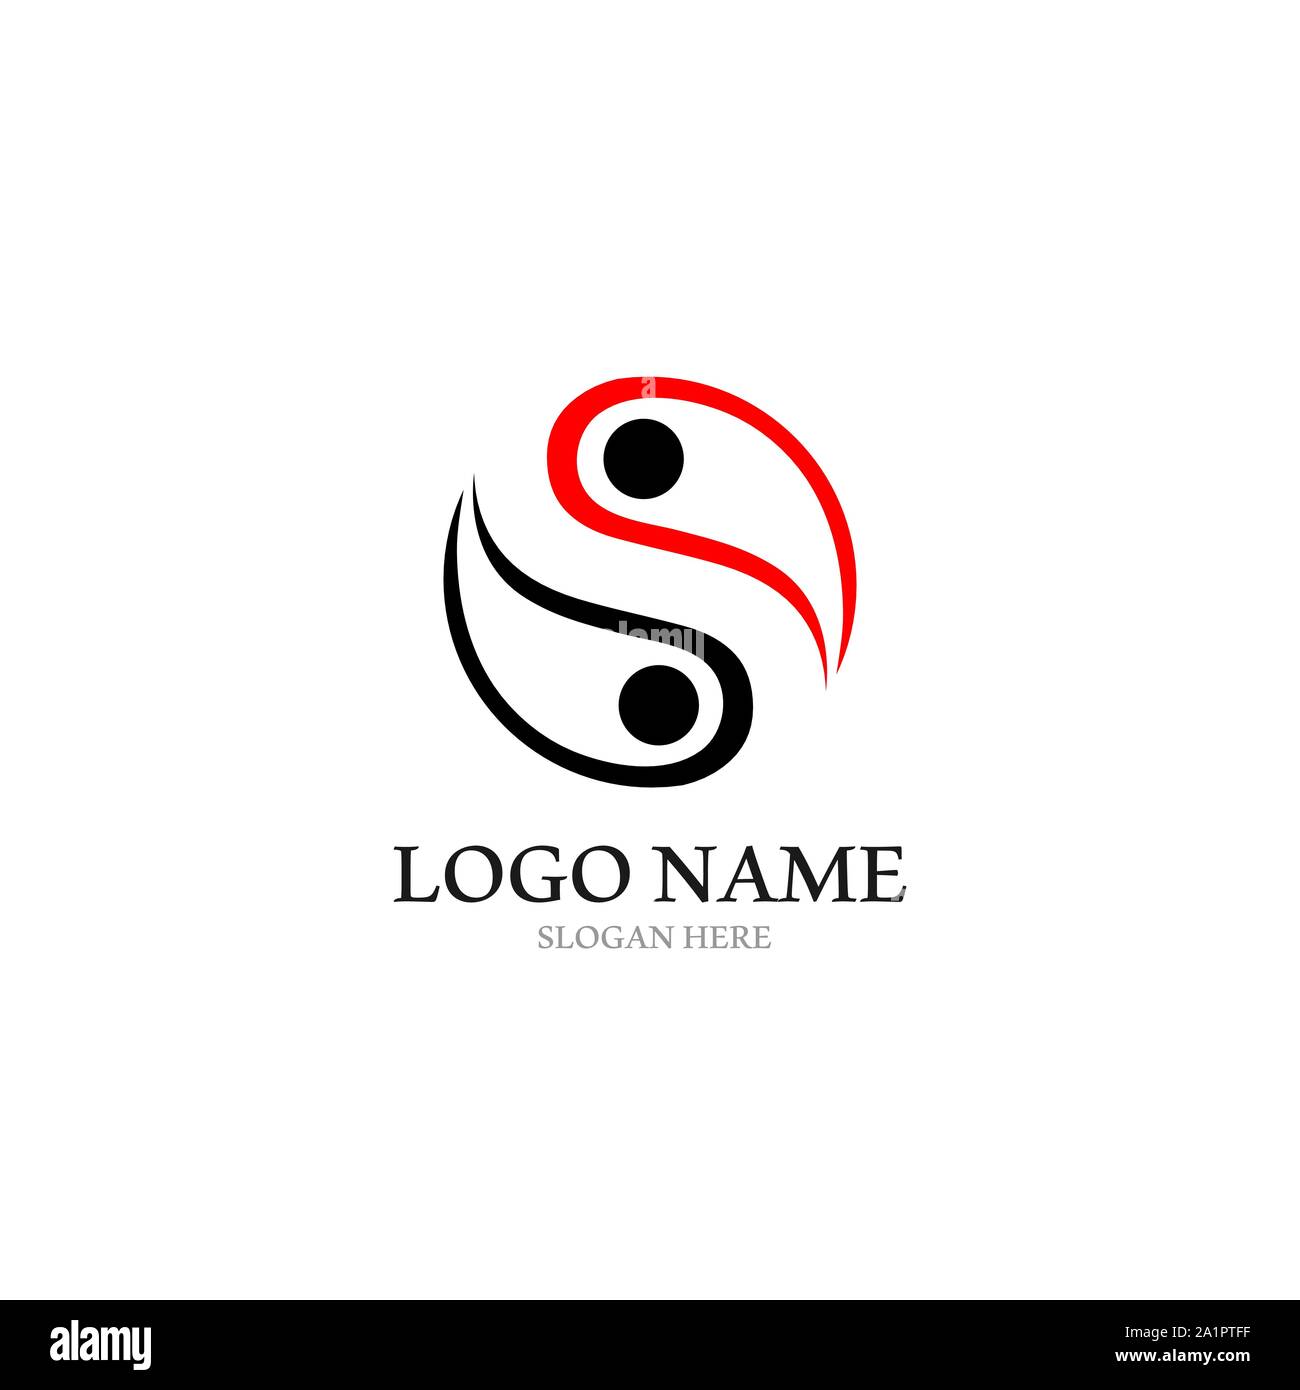 Yin yang logo icon vector Stock Vector Image & Art - Alamy